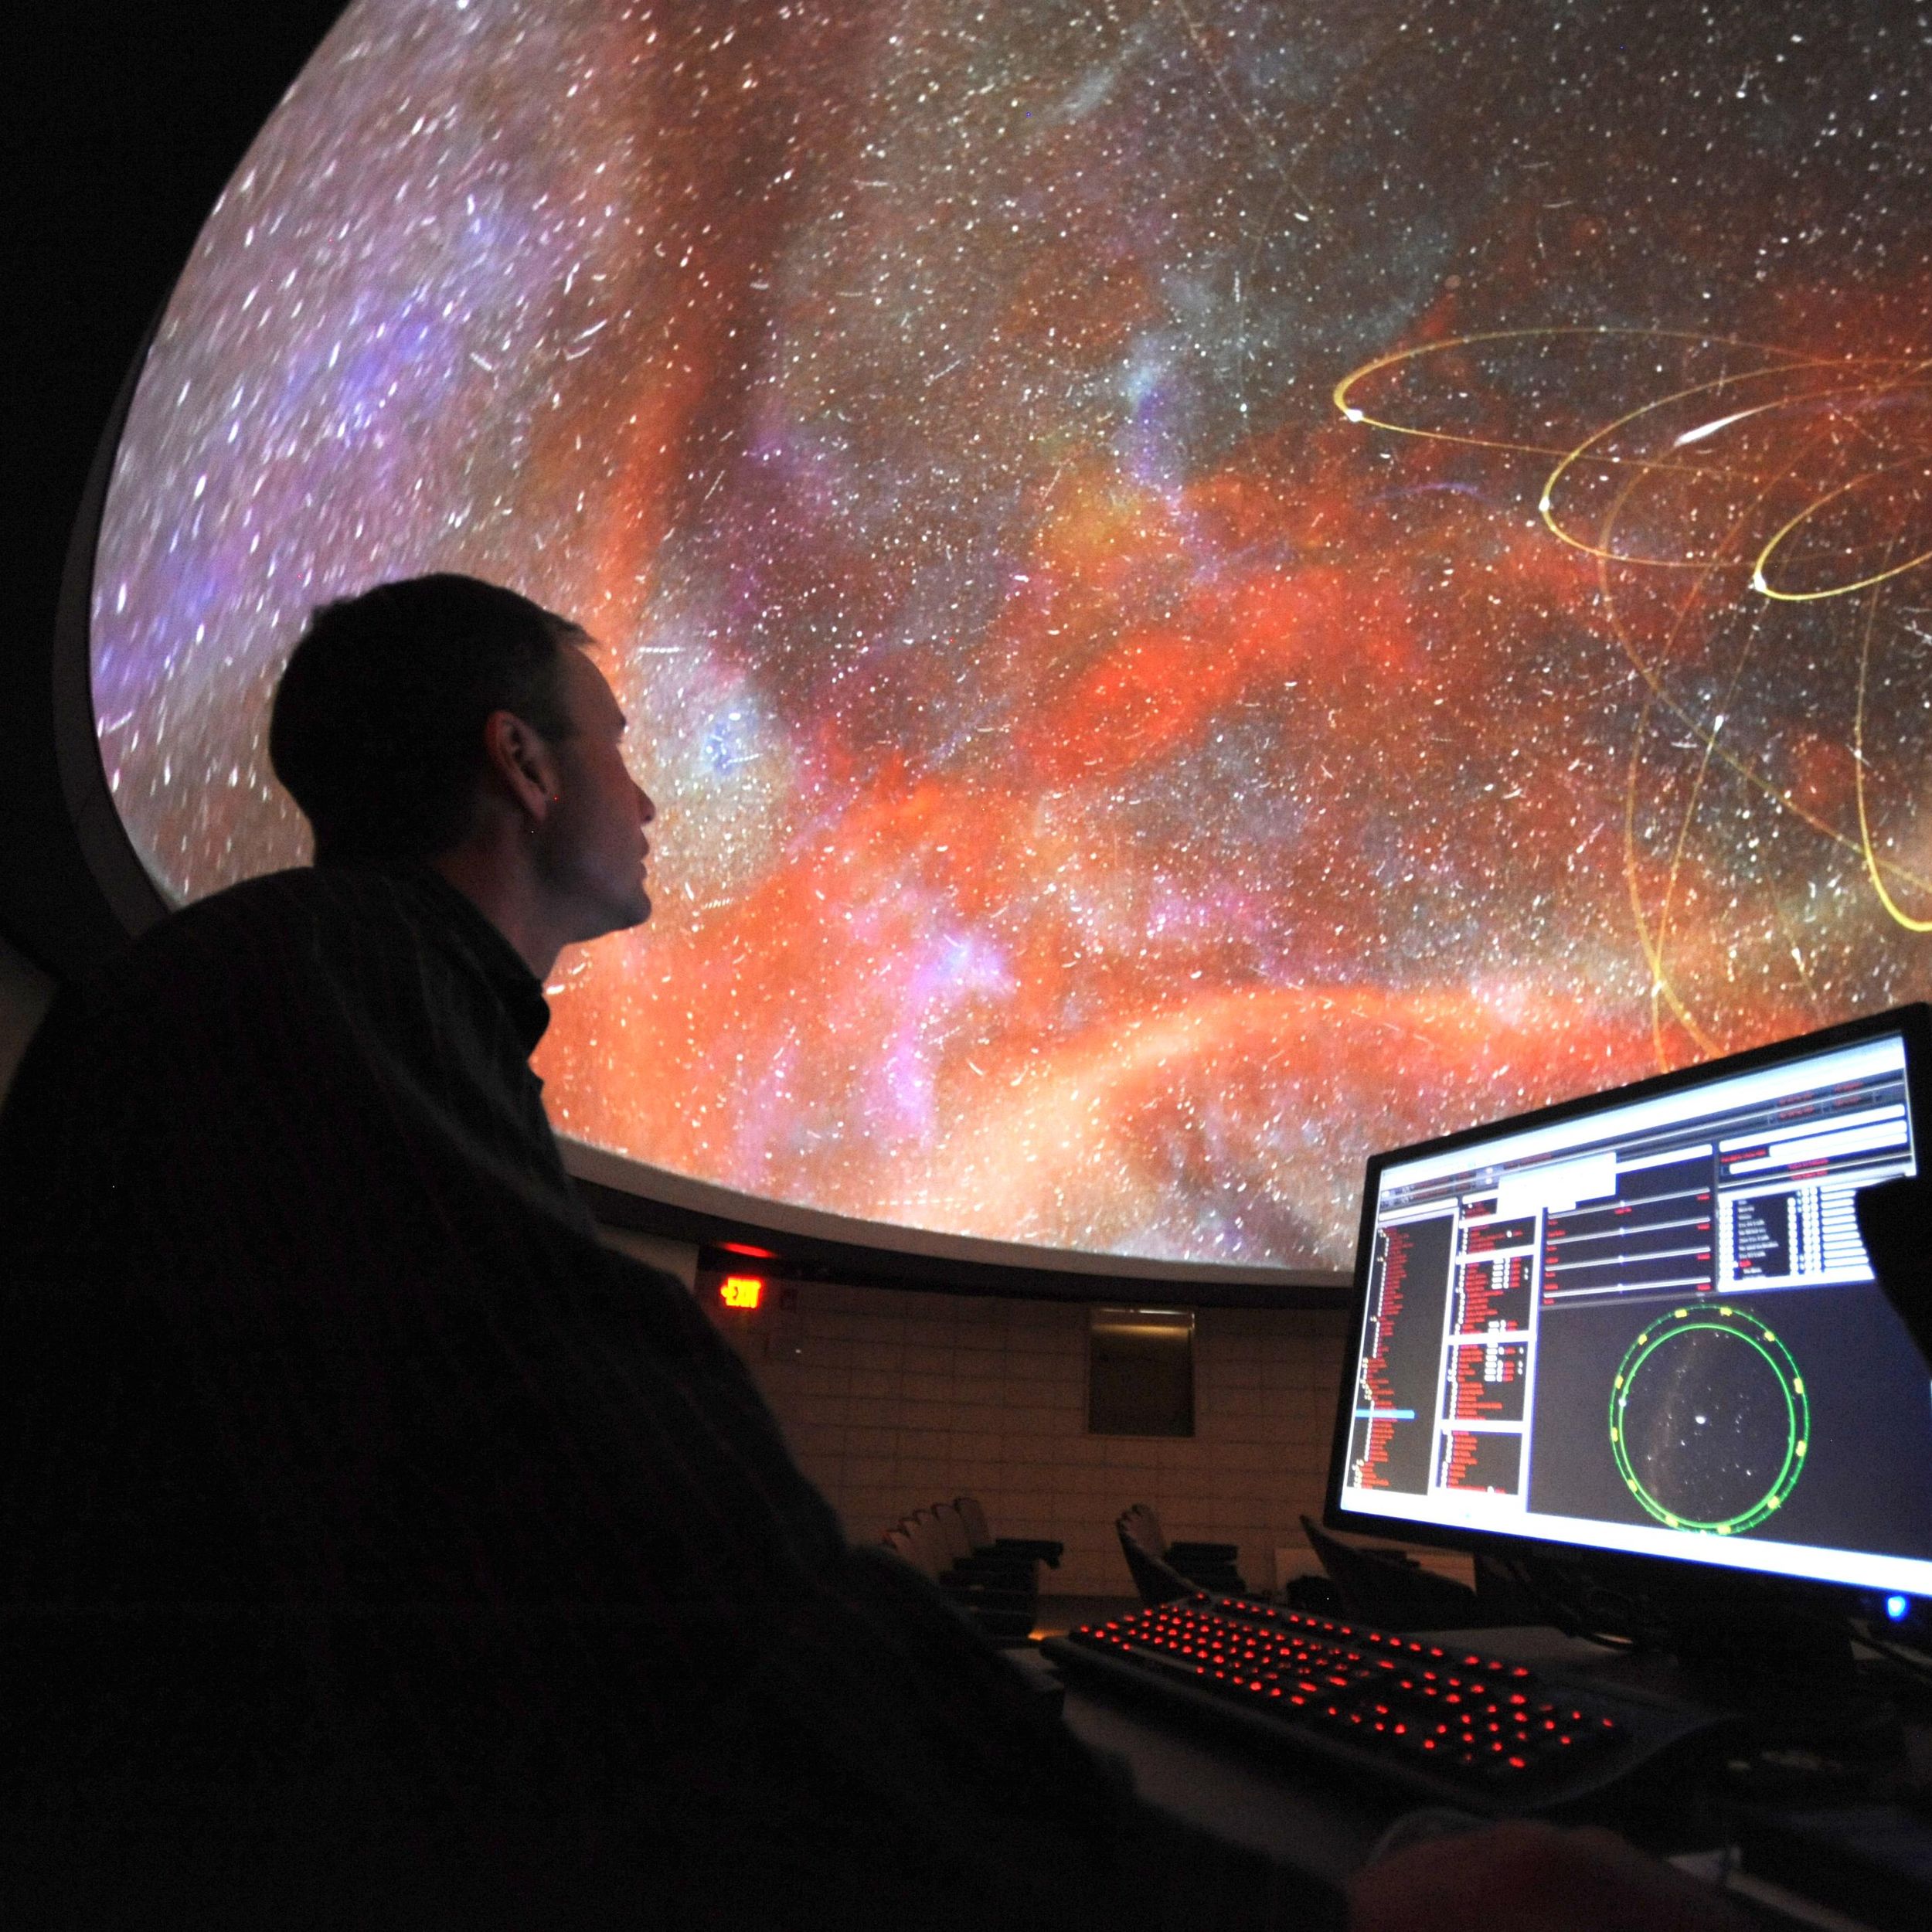 Planetarium Show: Star Stories